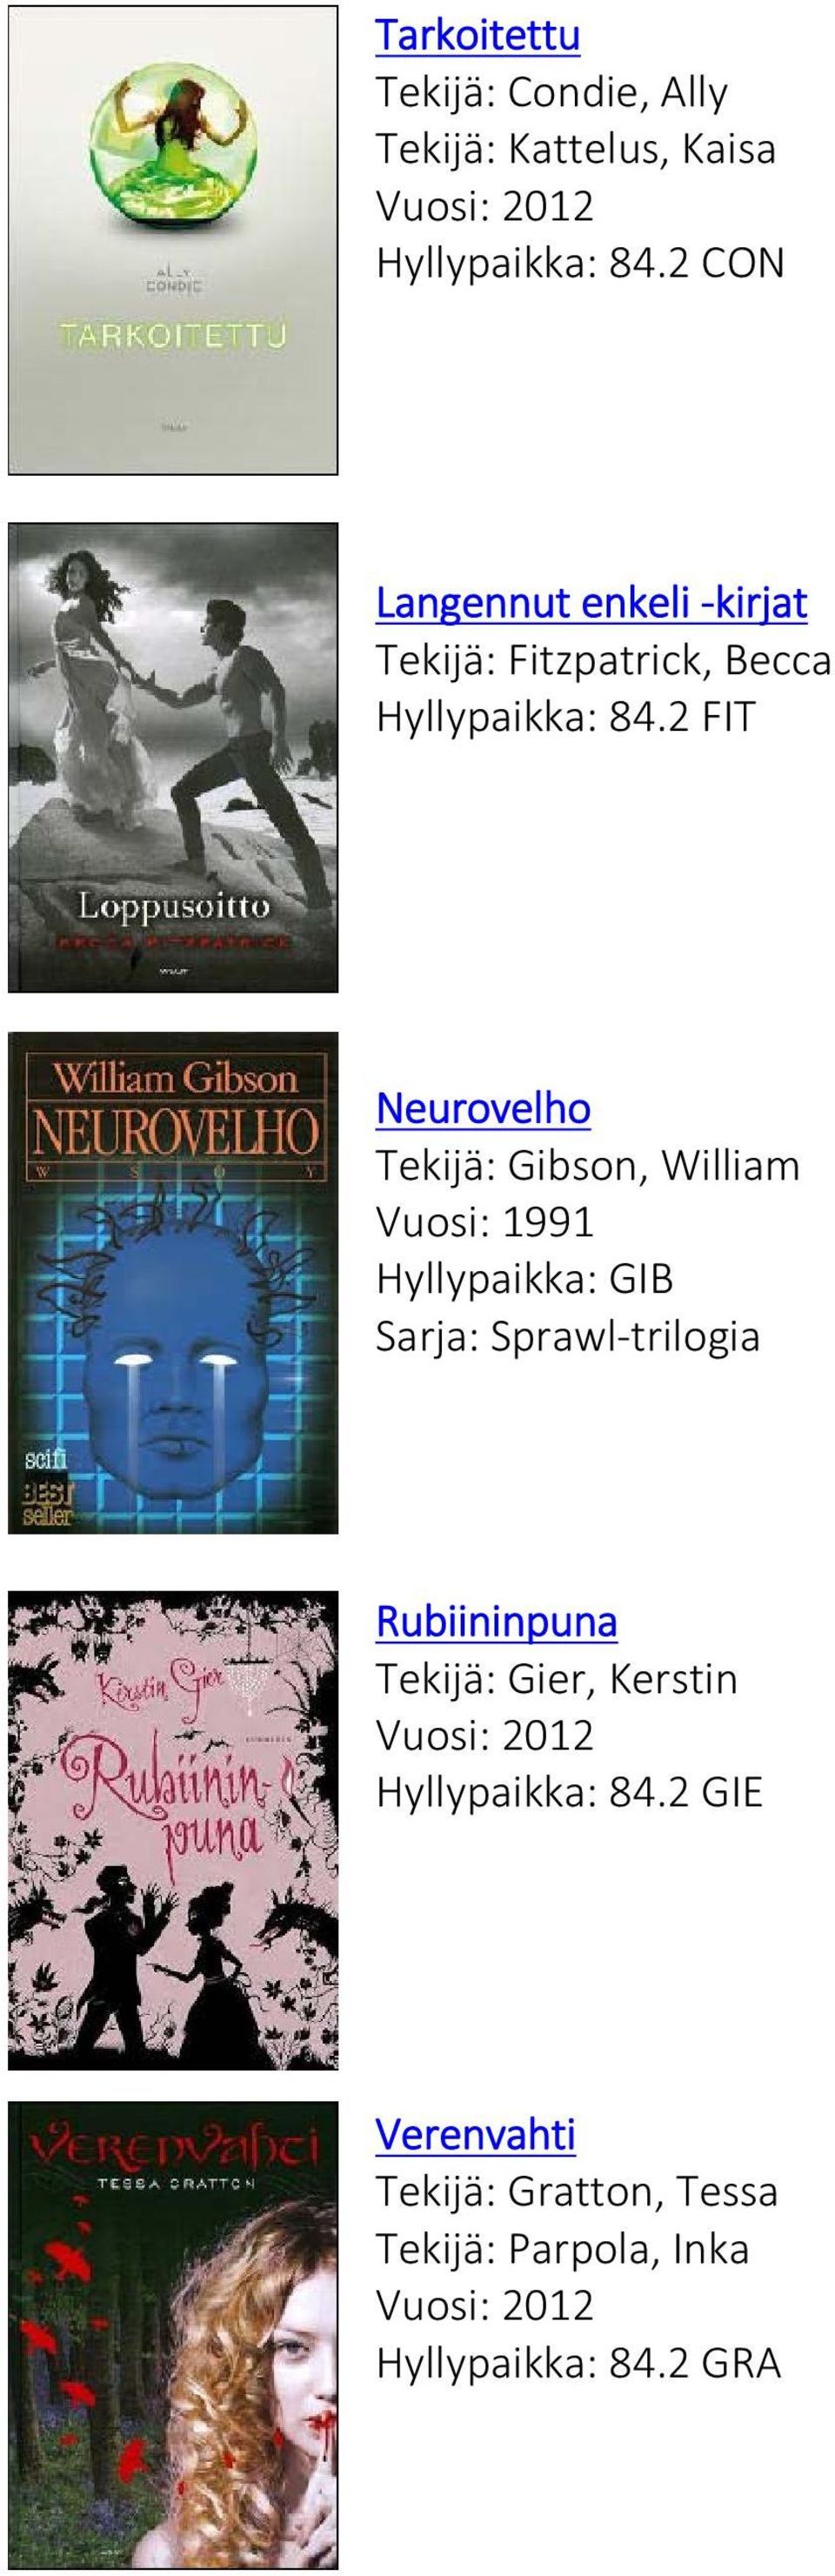 2 FIT Neurovelho Tekijä: Gibson, William Vuosi: 1991 Hyllypaikka: GIB Sarja: Sprawl trilogia